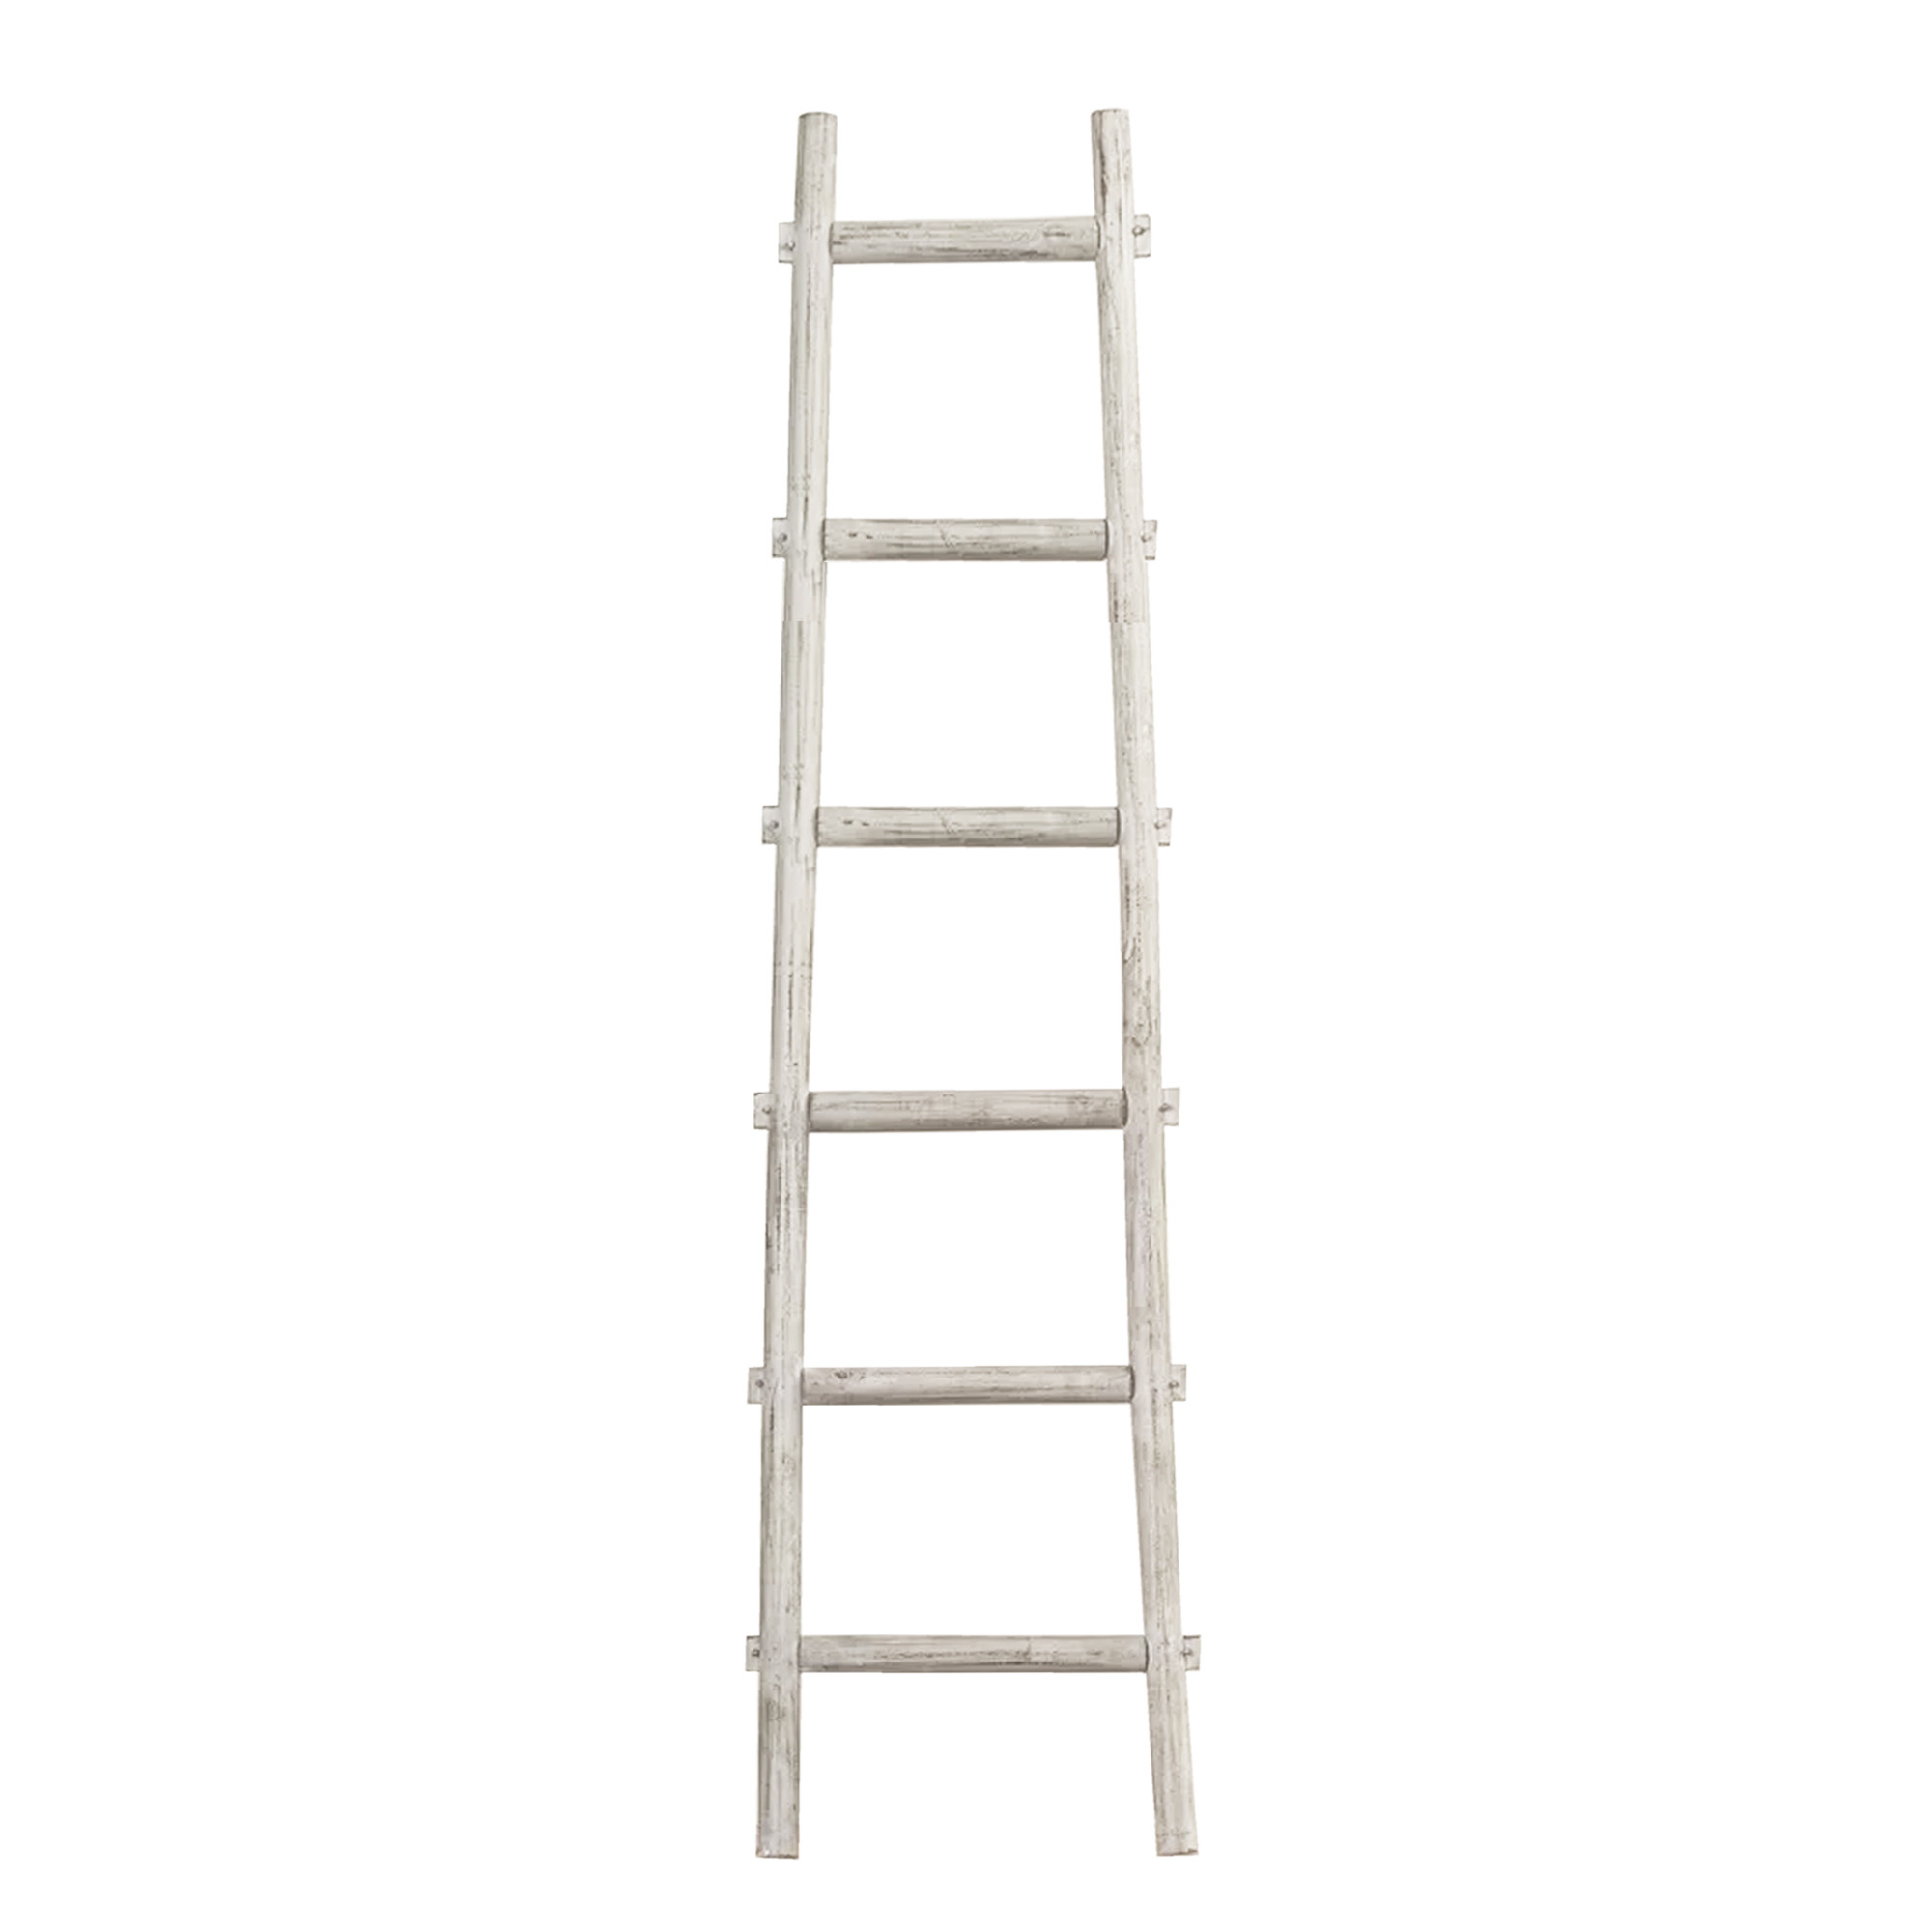 72" X 18" X 2" White Decorative Ladder Shelve-379919-1